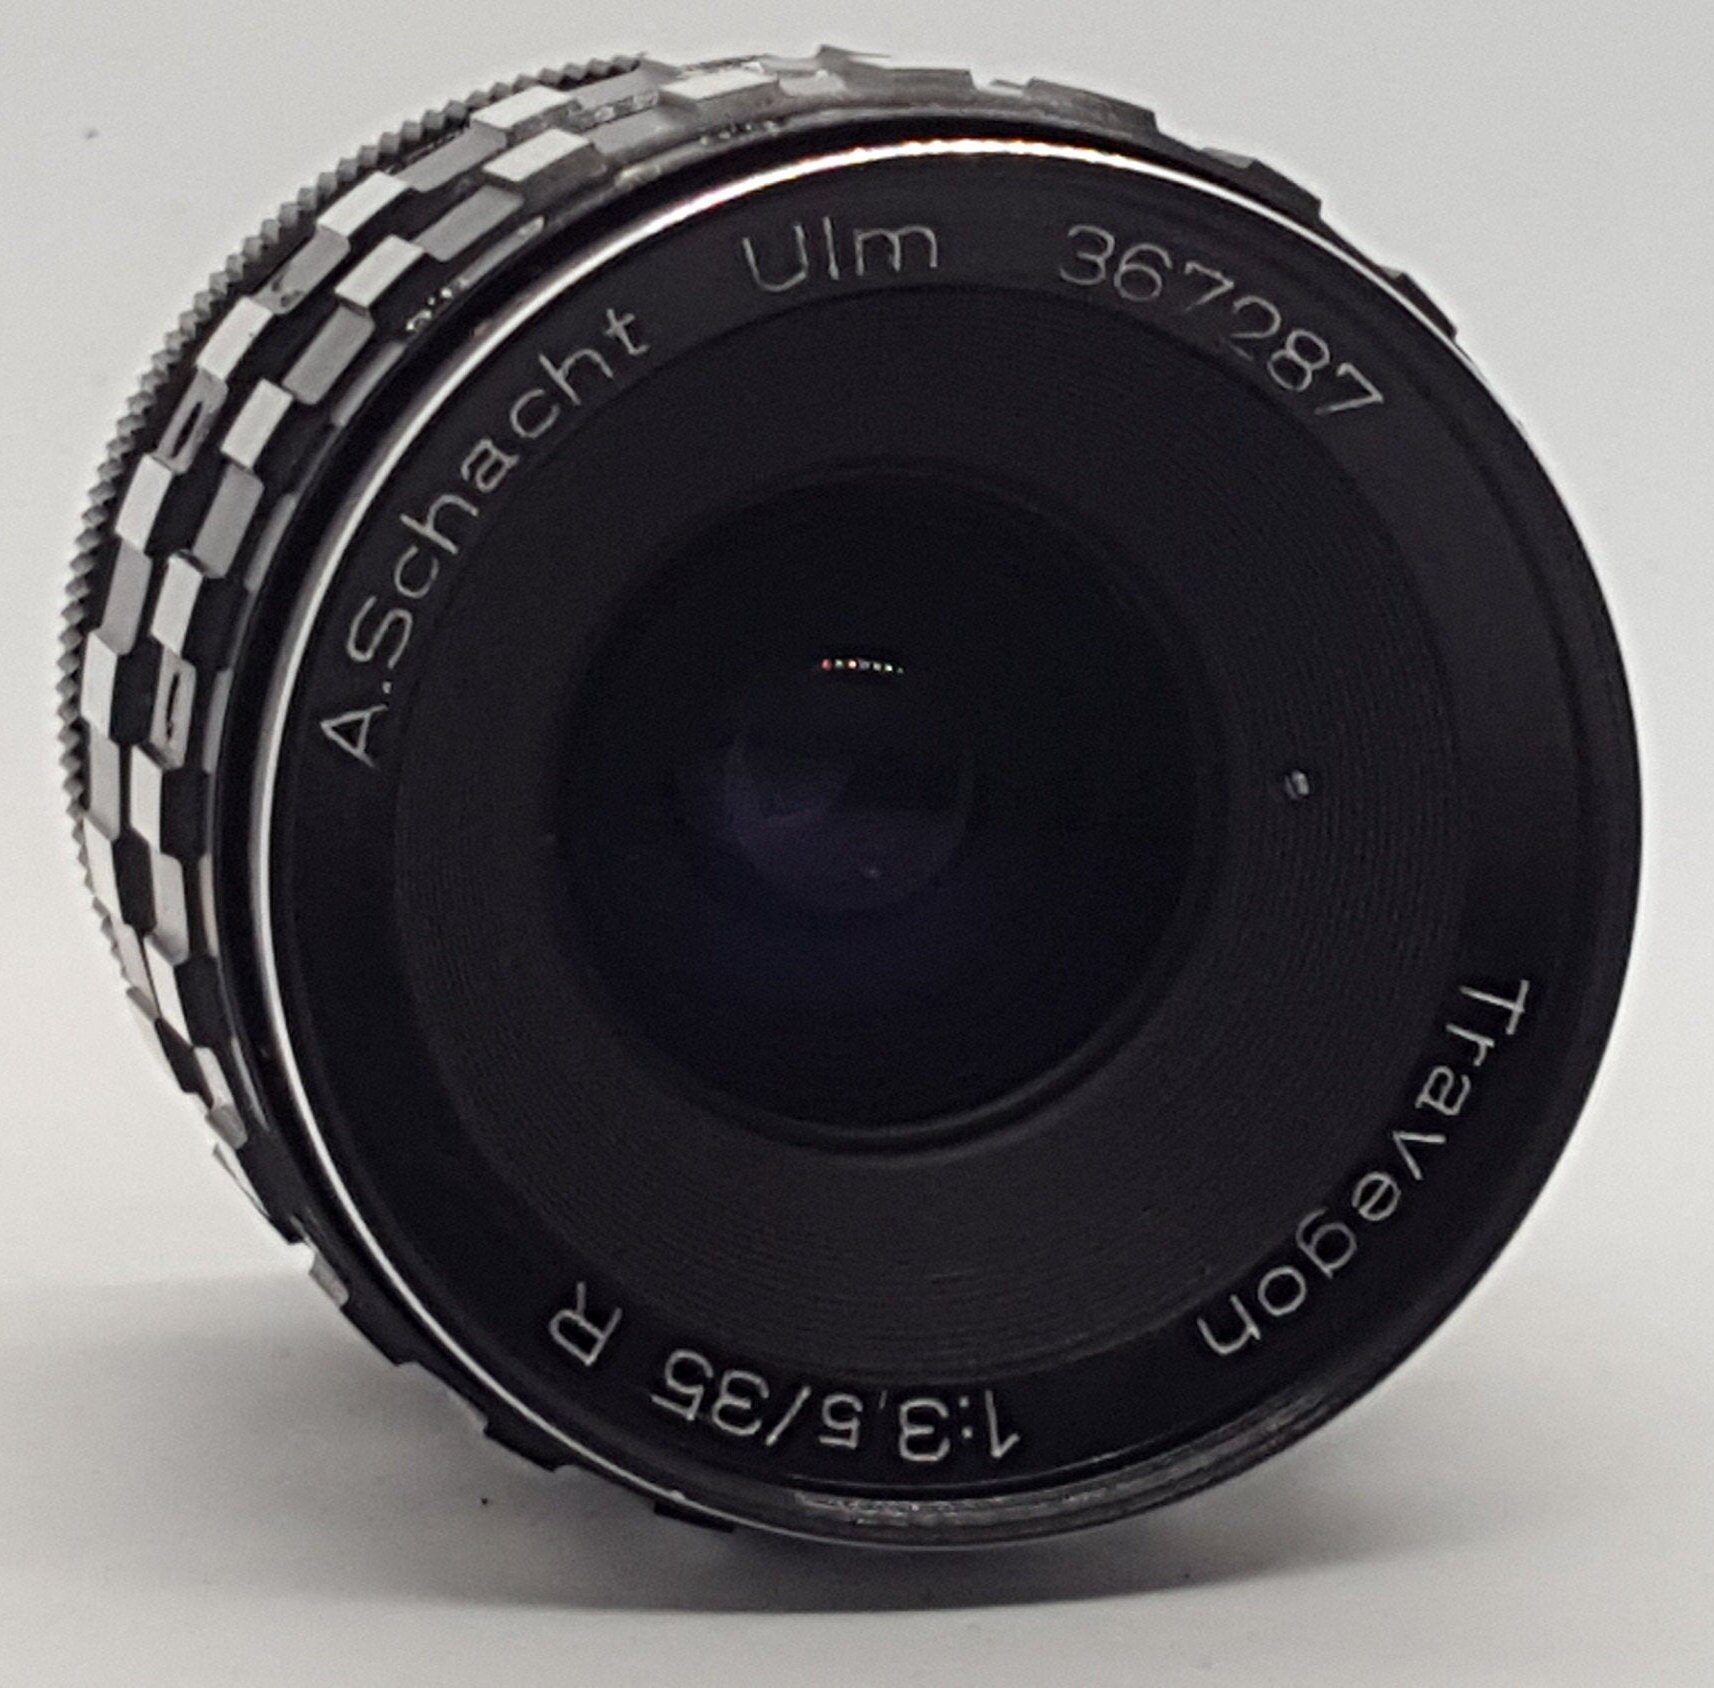 20411○Travegon 1:3.5/35 R Ulm Lens made in Germany 